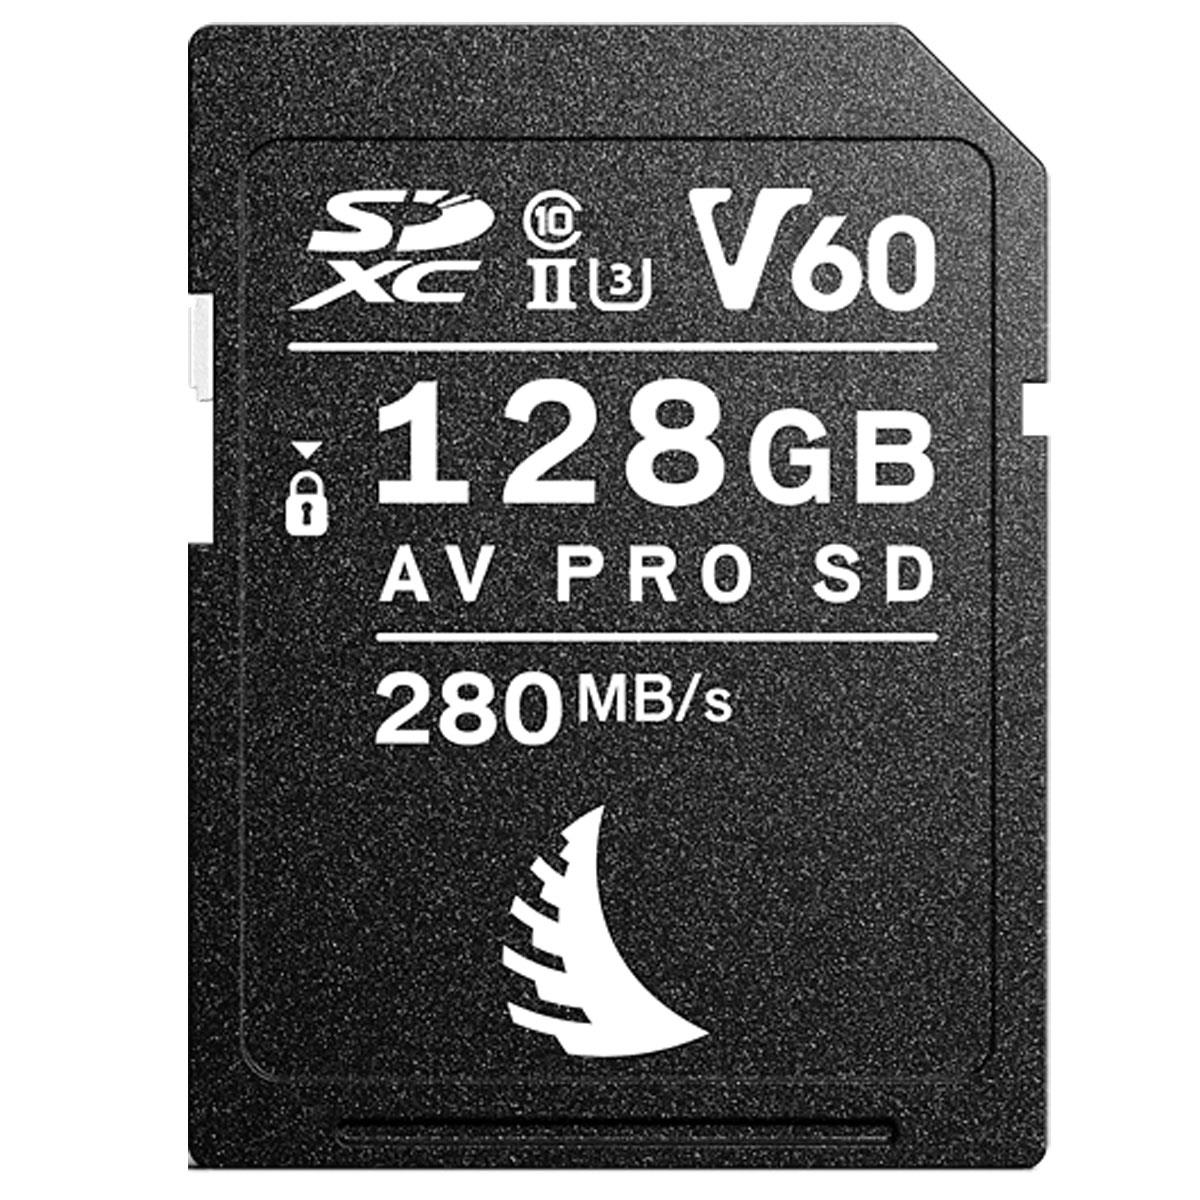 Image of Angelbird AV PRO SD MK2 V60 128GB SDXC UHS-II Memory Card